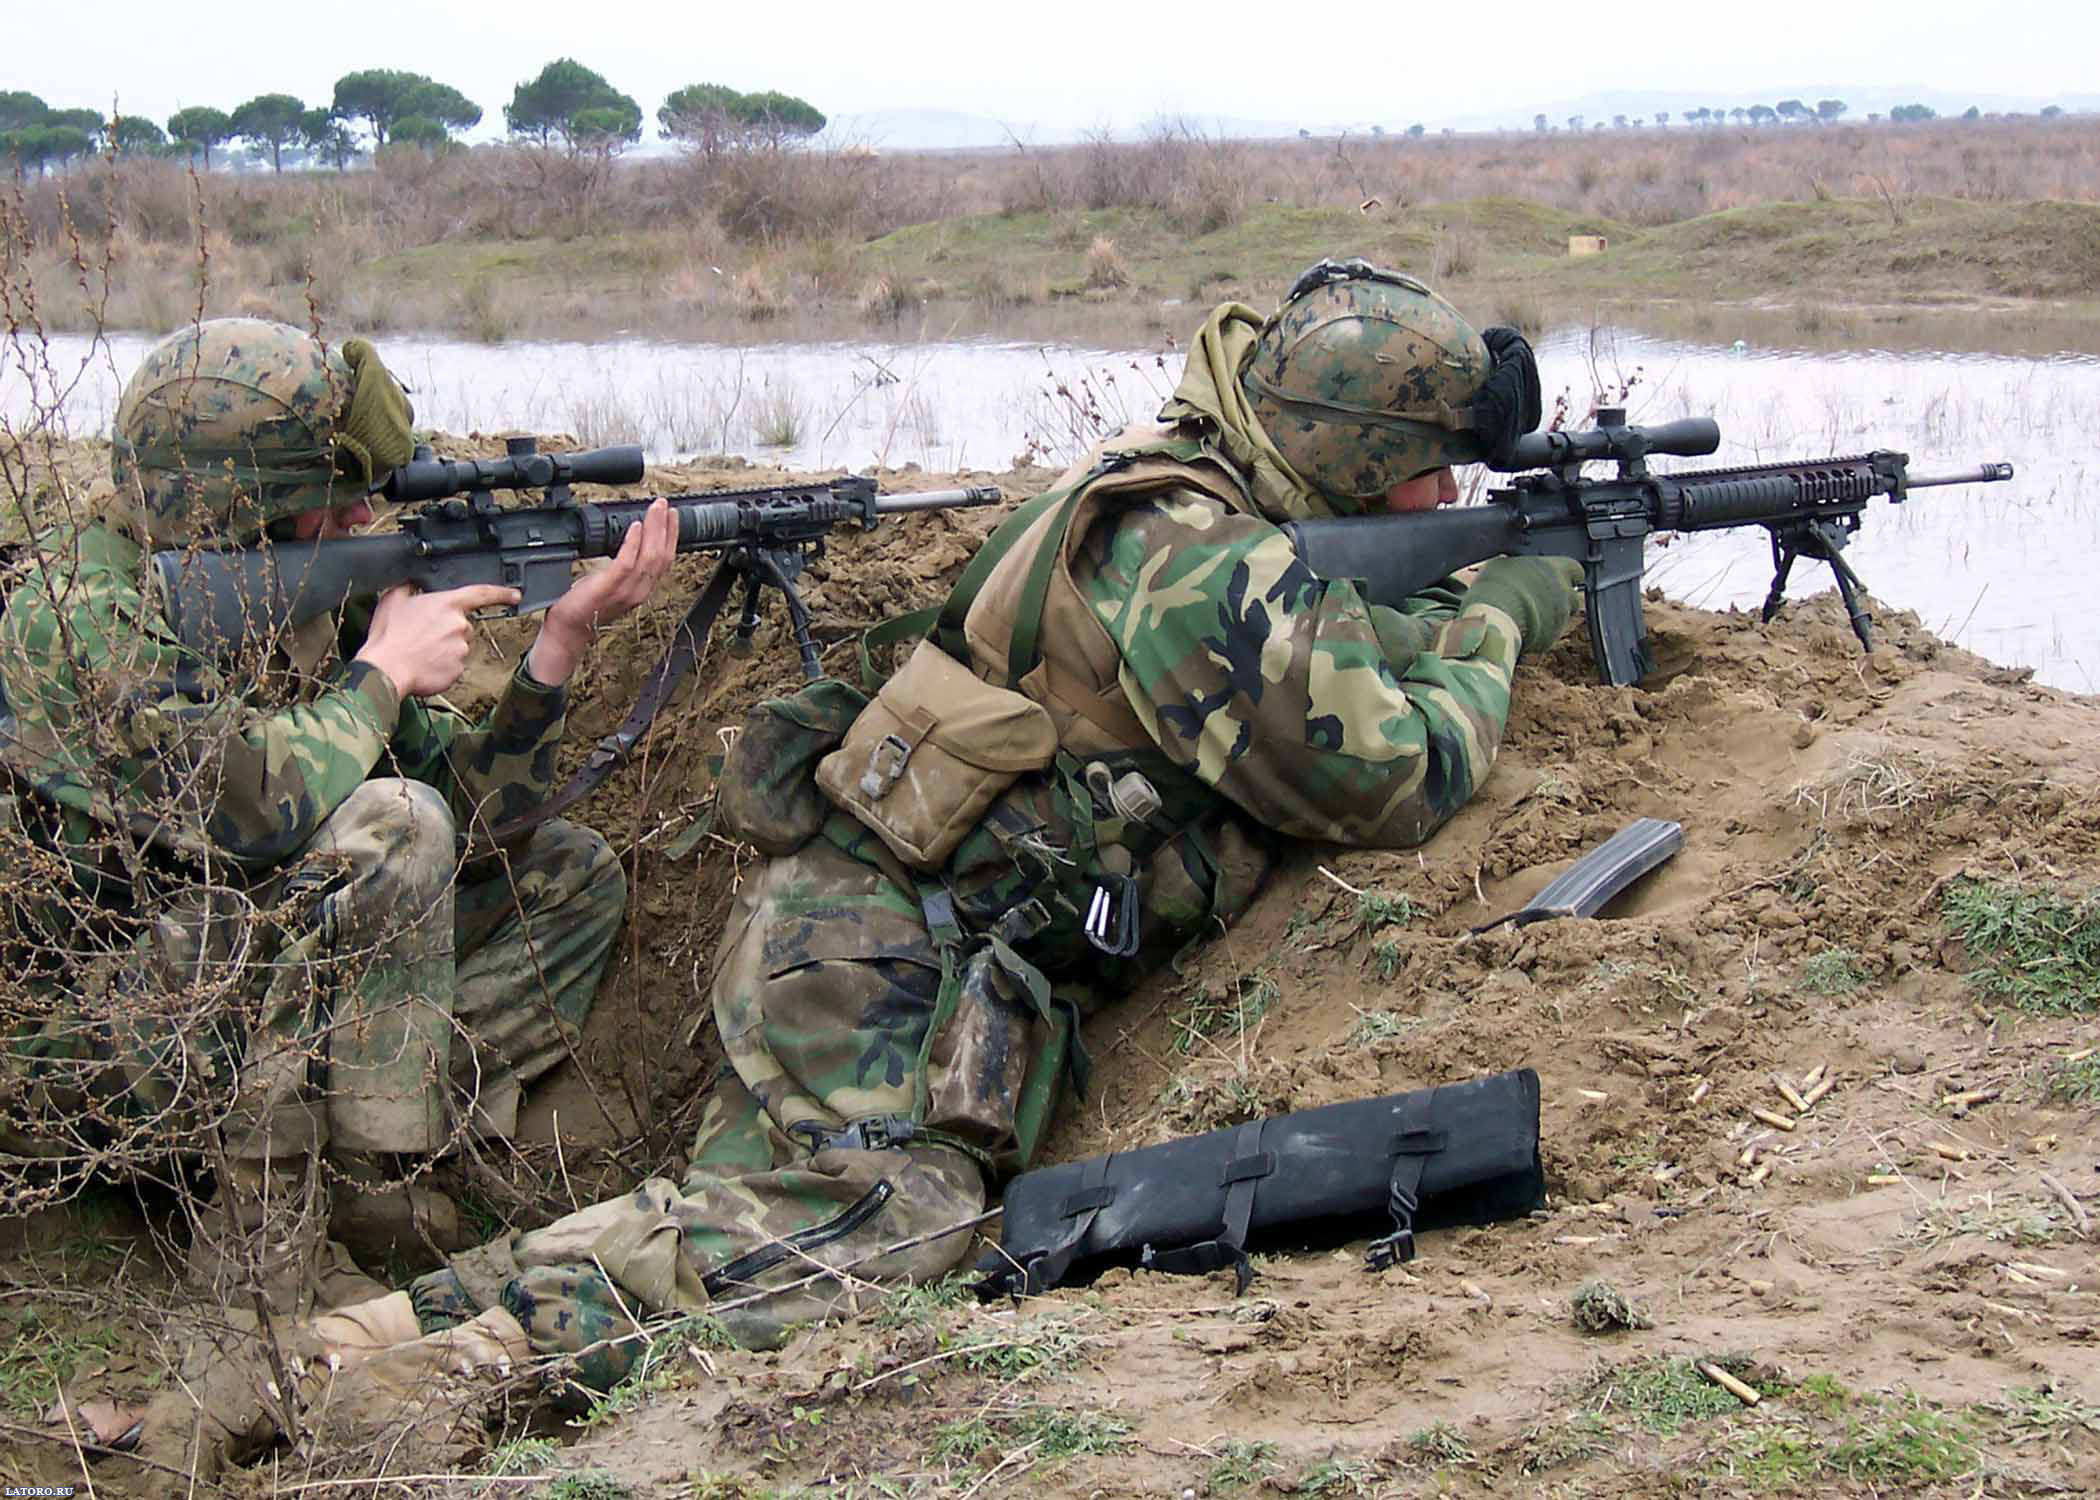 Marines with sniper rifle Desktop Wallpapers FREE on Latorocom